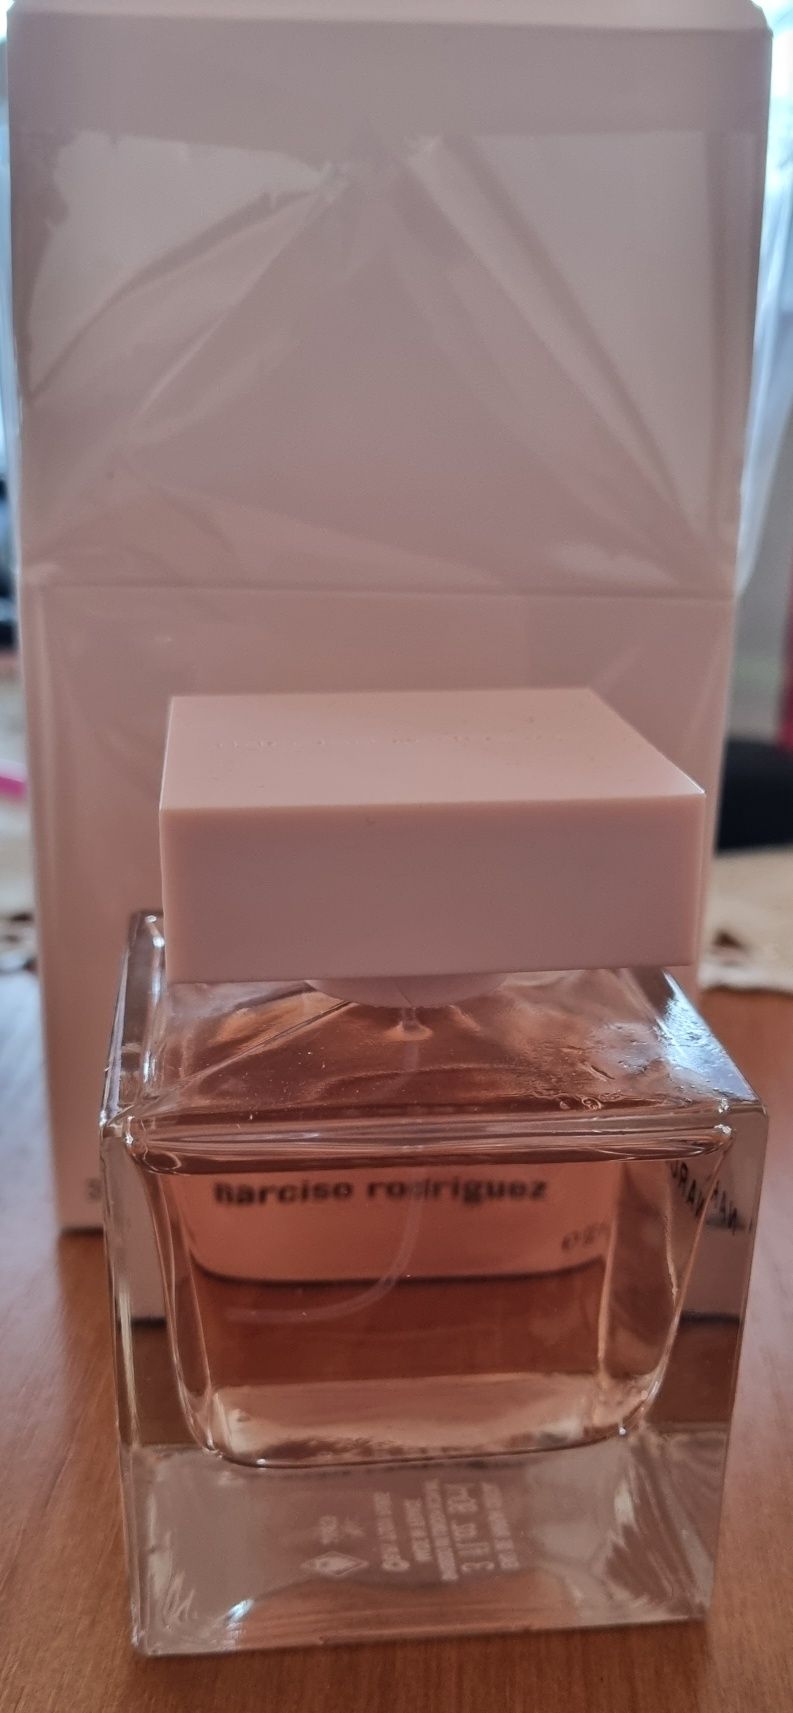 Narciso Rodriguez eau de parfum crystal 90ml